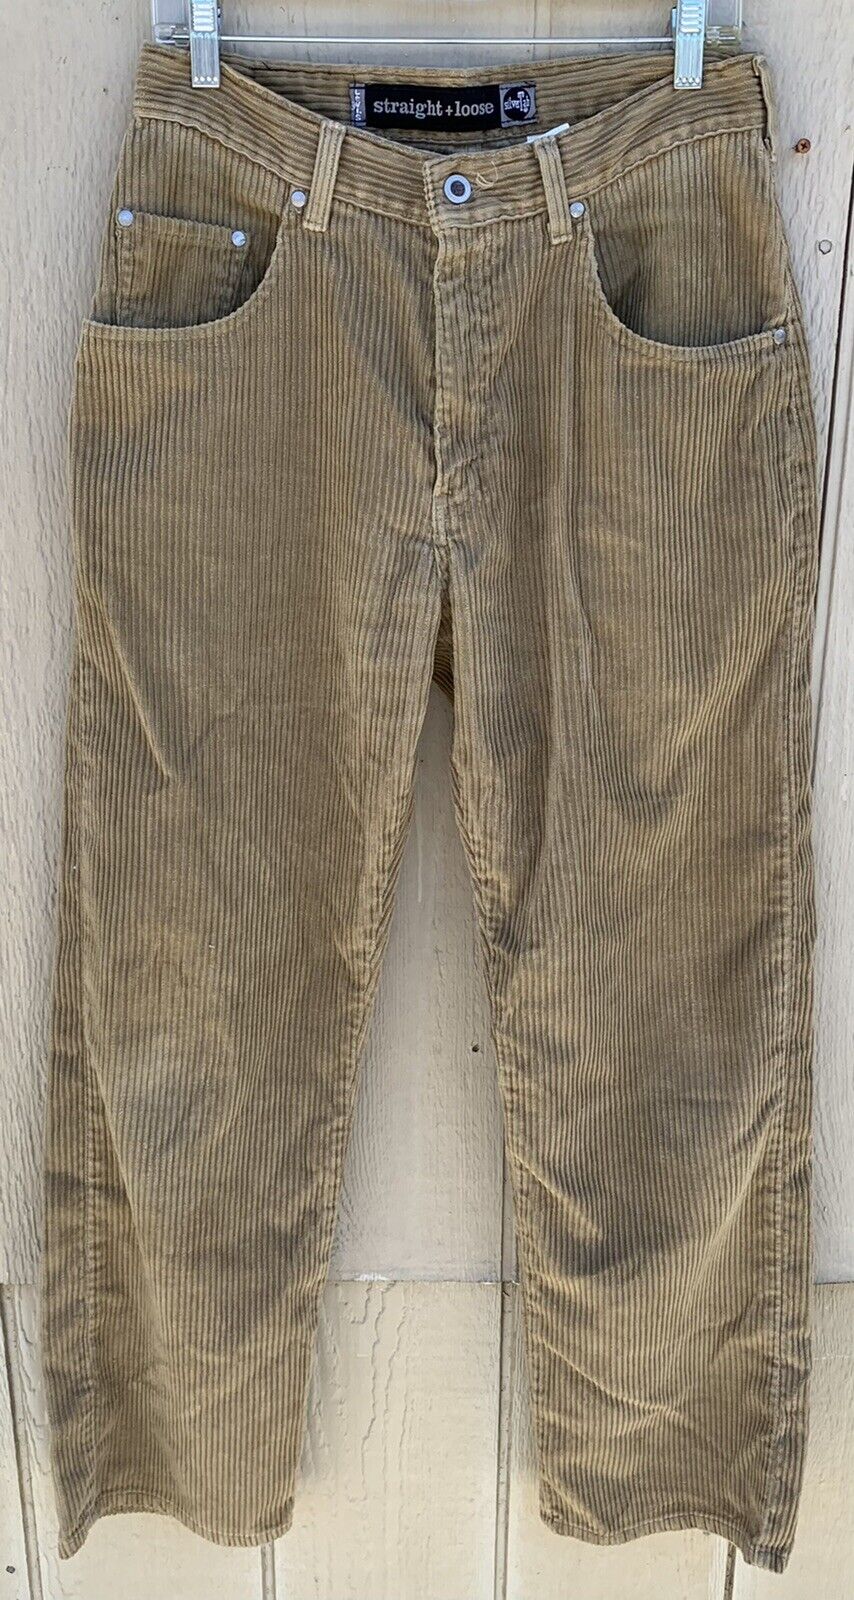 vintage Levi’s silverTab corduroy pants straight & loose W 31 (measures 32)  L 32